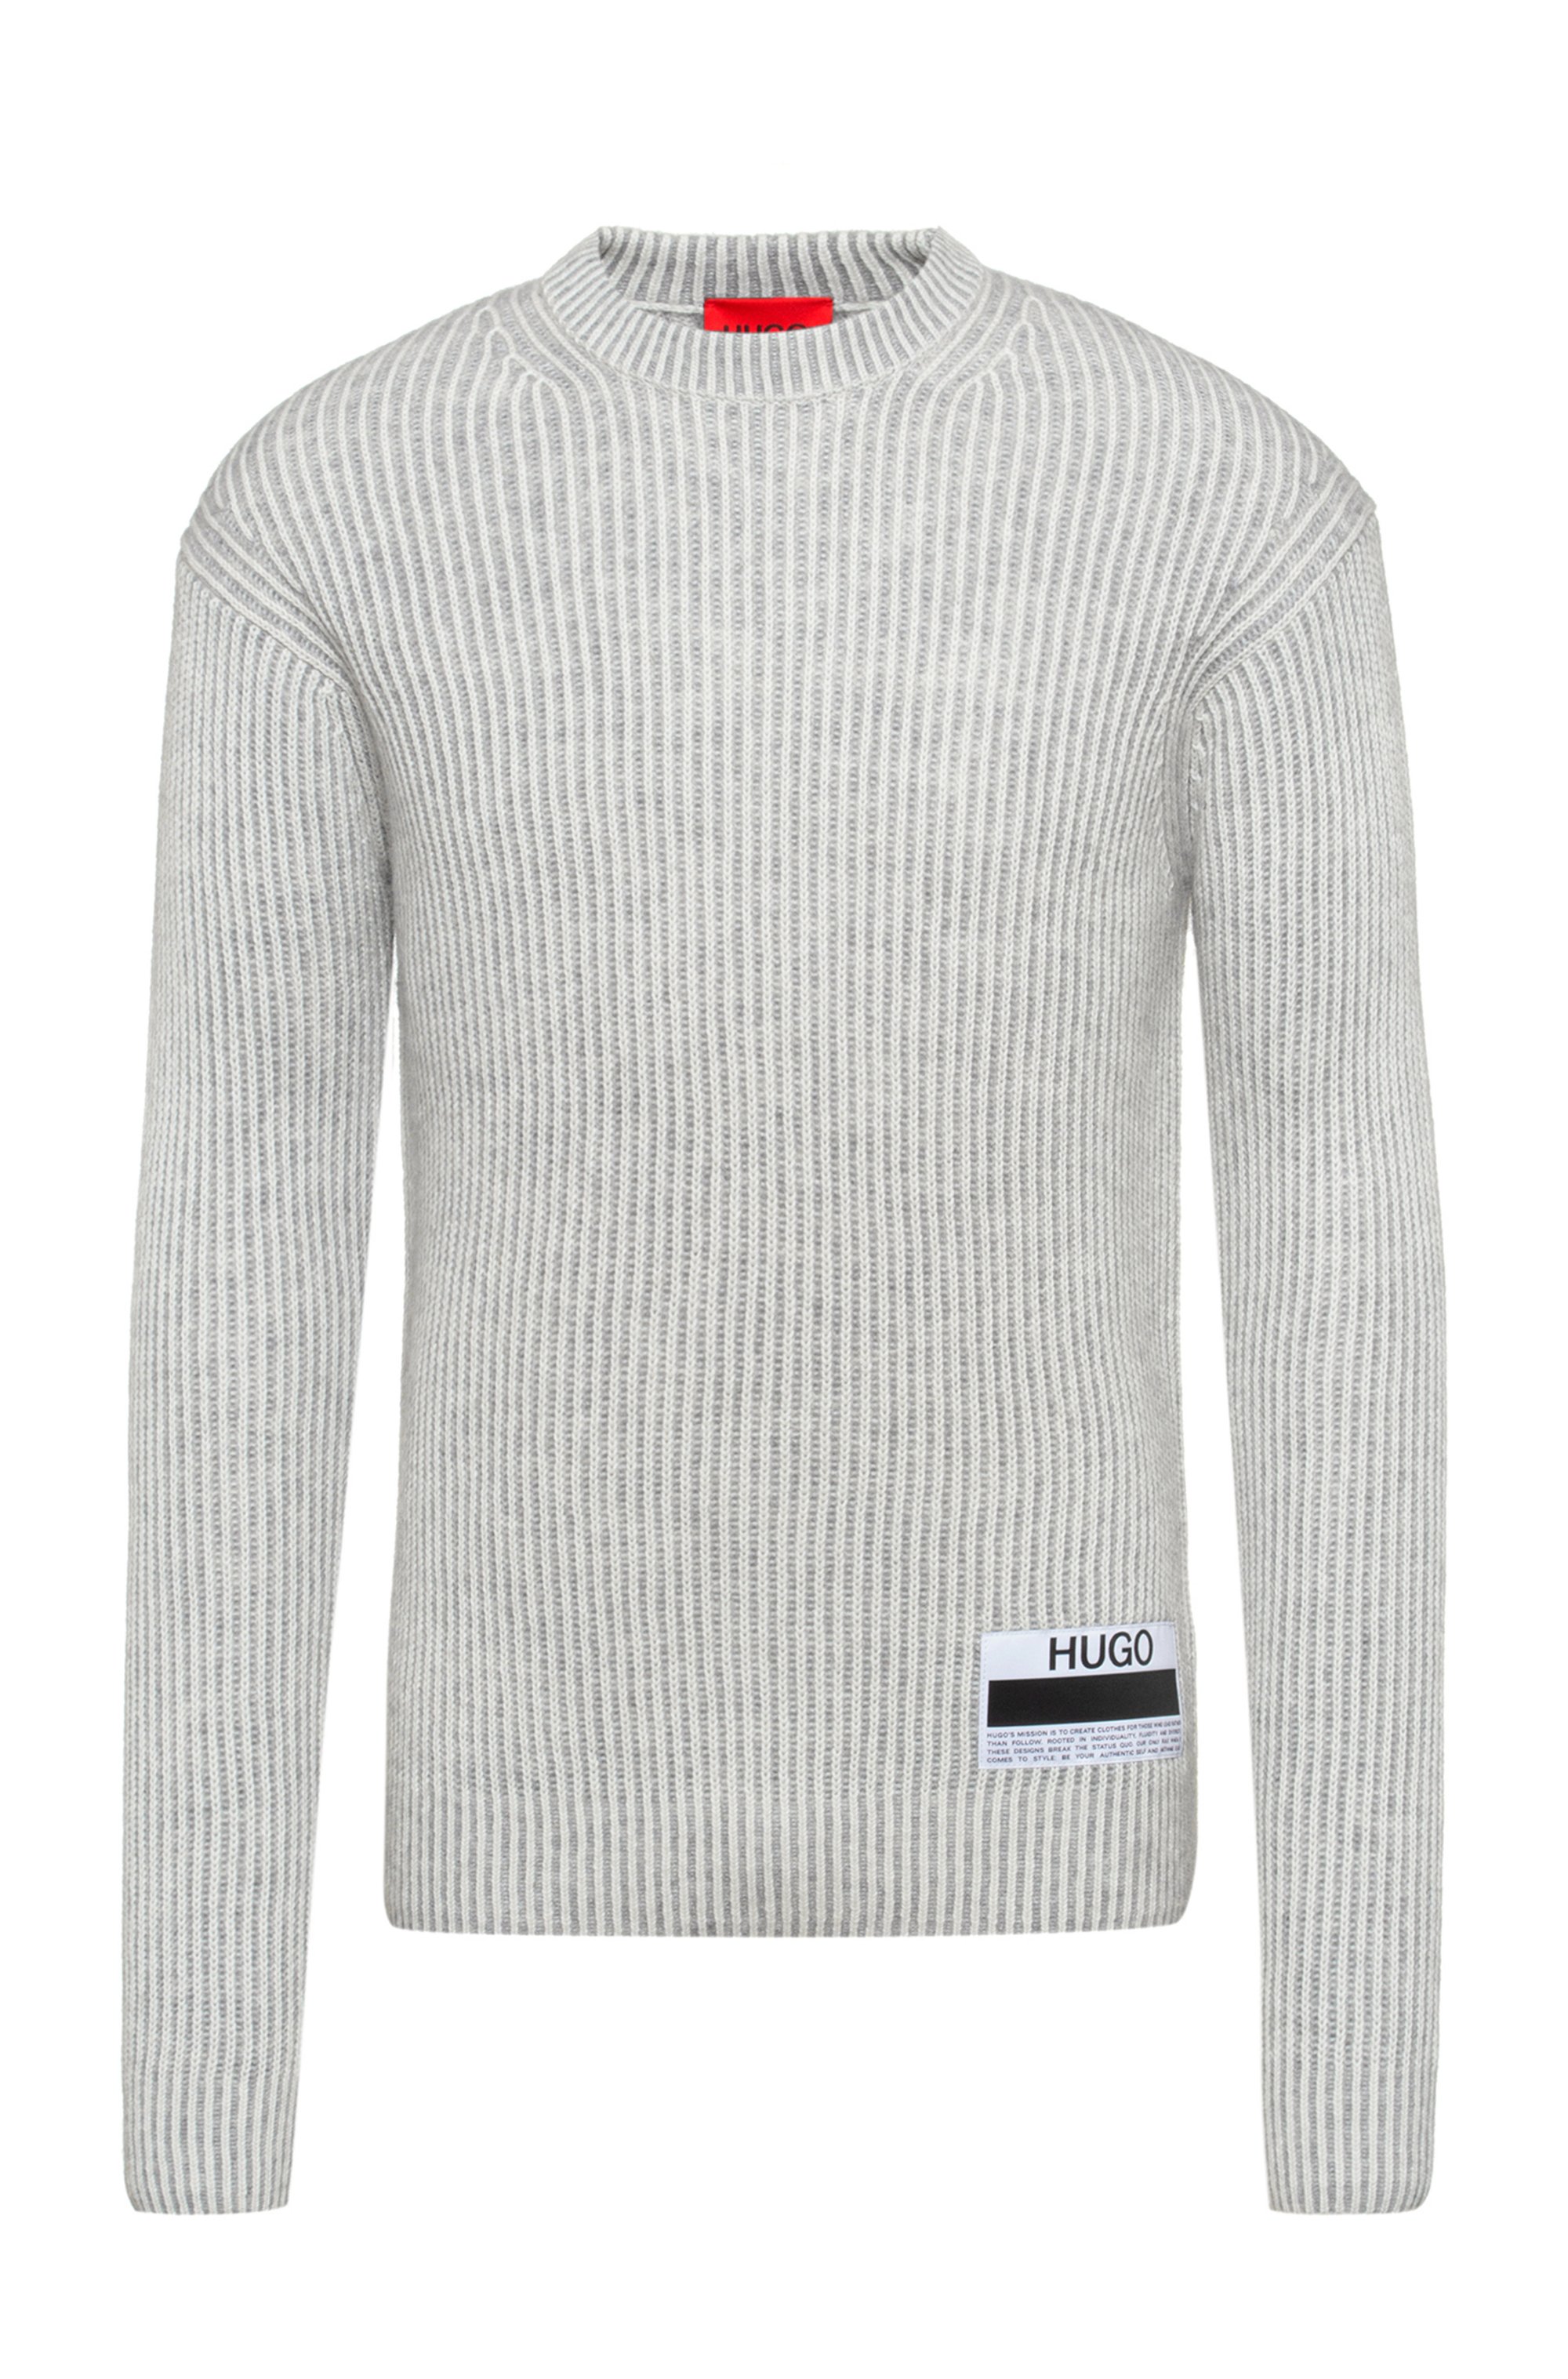 Ribbed sweater with manifesto logo, White